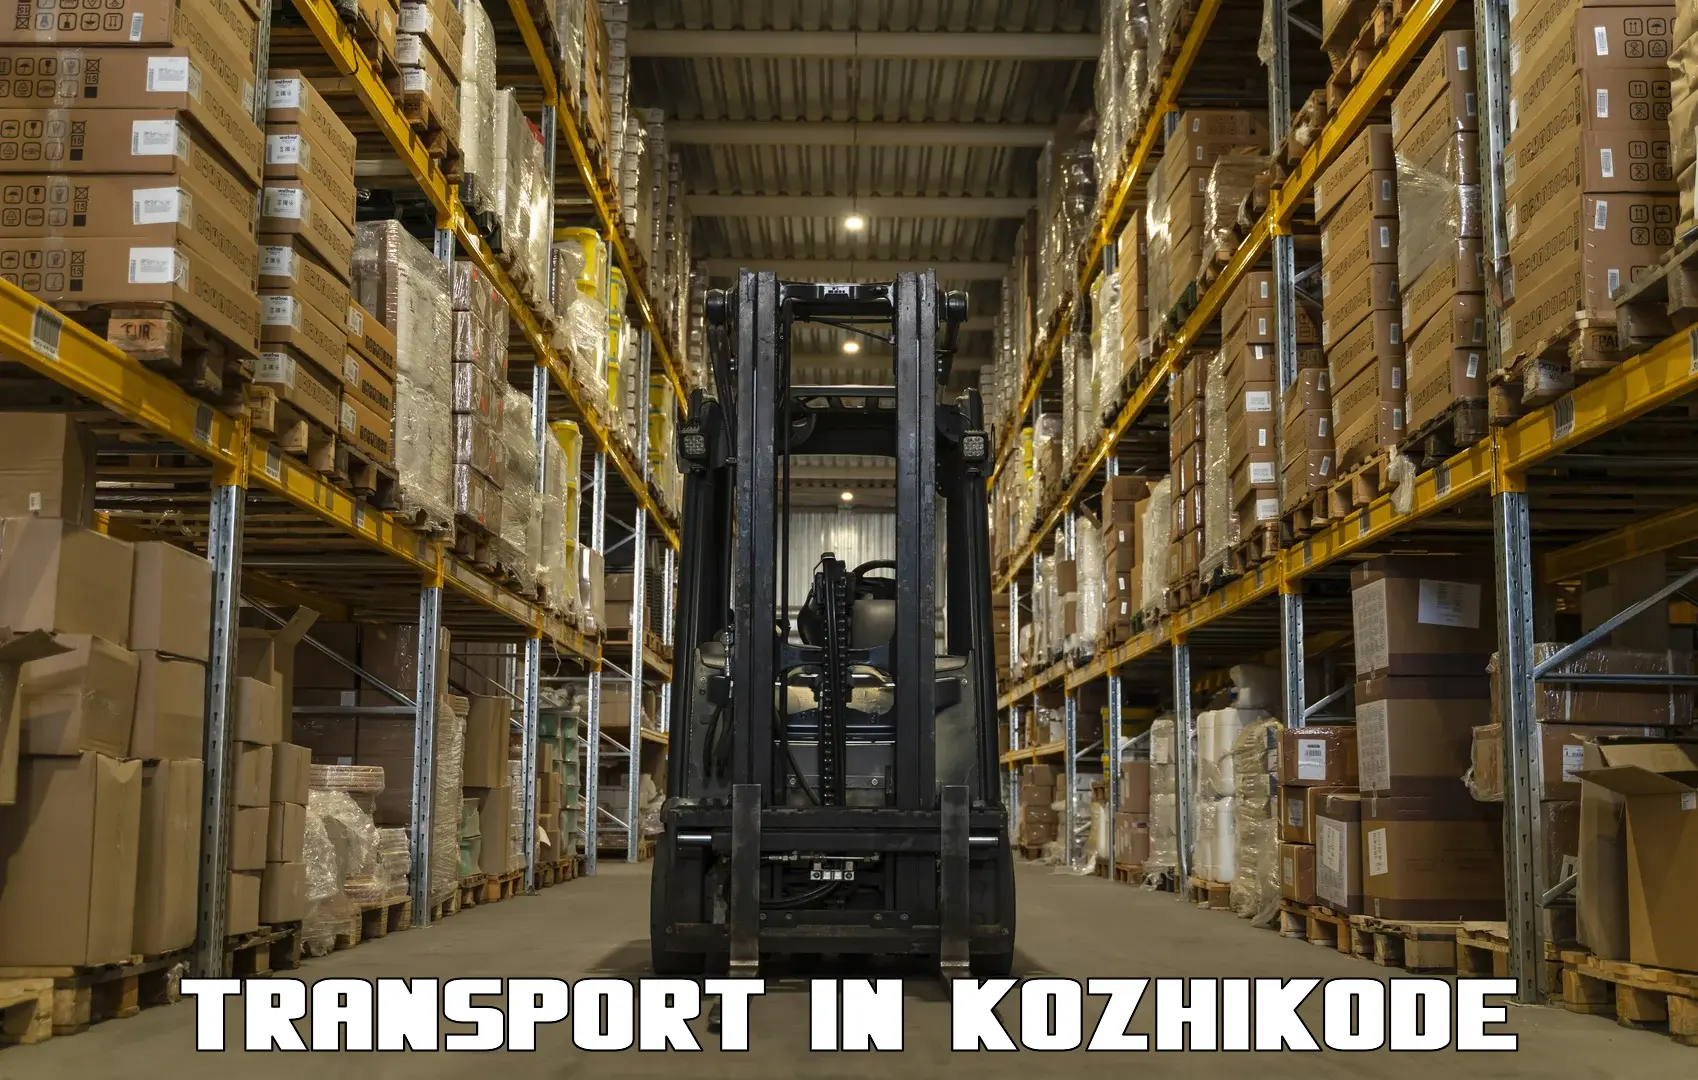 Interstate goods transport in Kozhikode